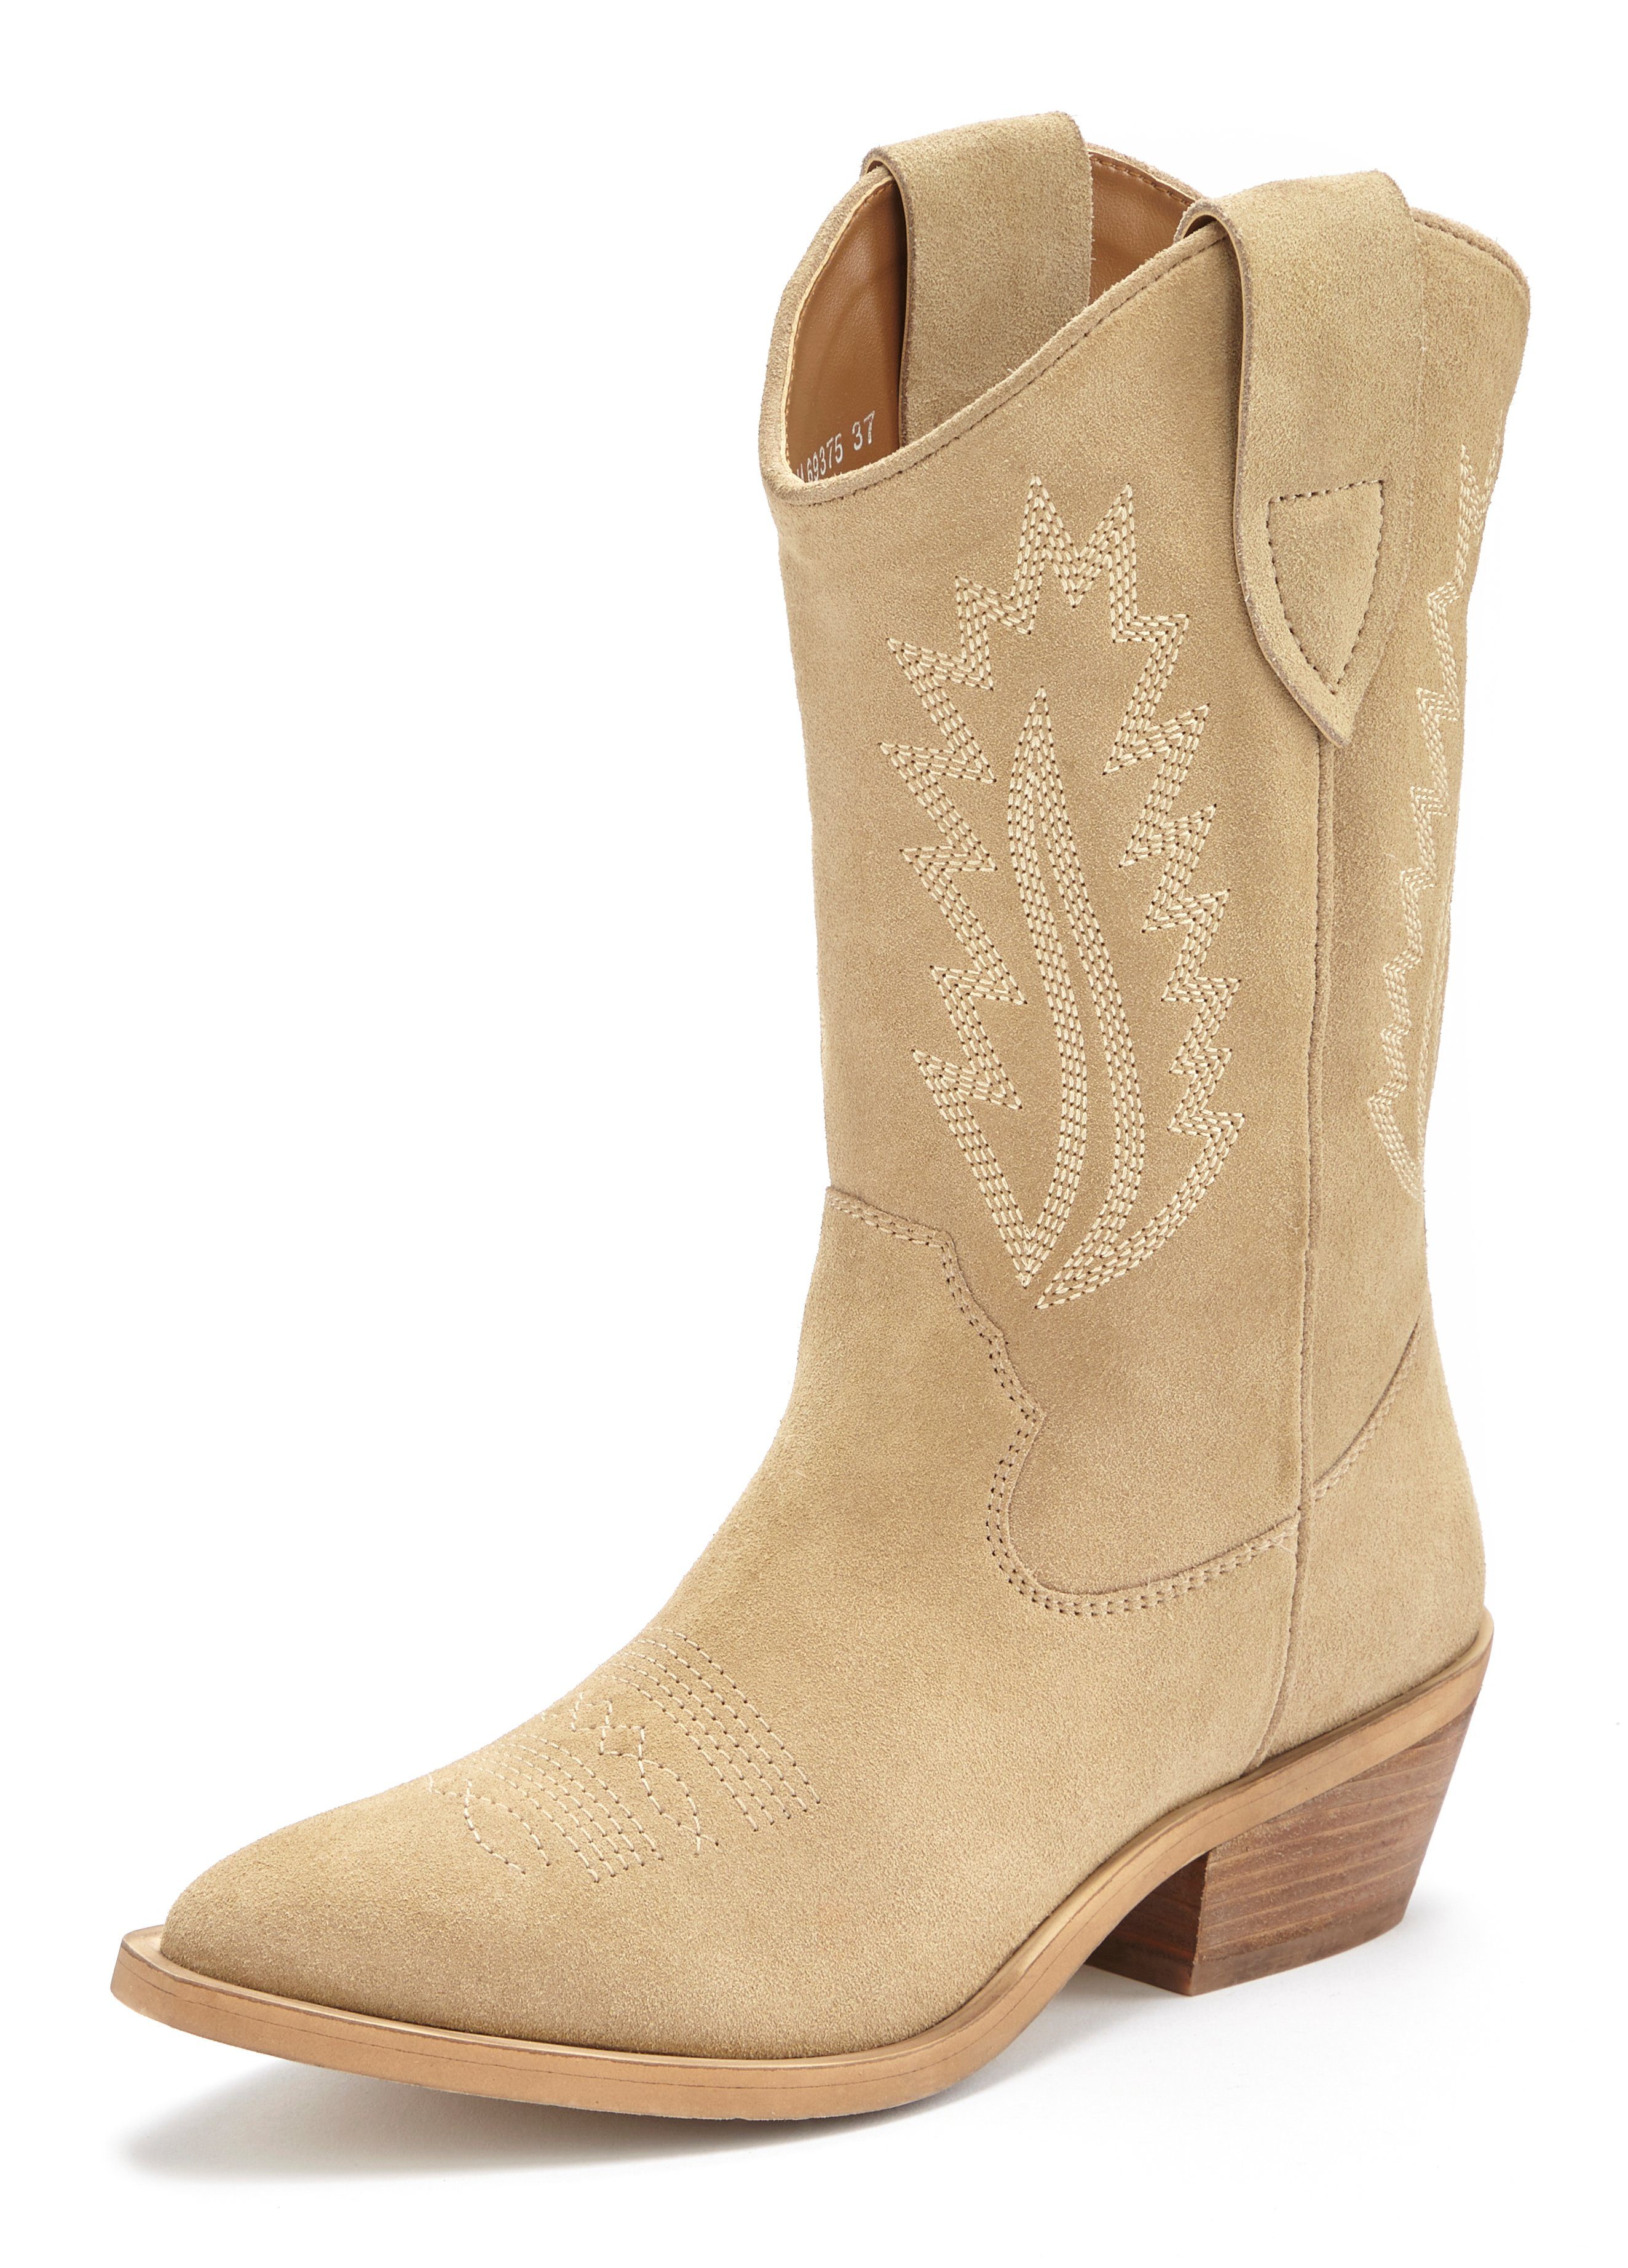 LASCANA Cowboy Cowboy hochwertigem Ankleboots Stiefelette, Boots aus Leder Western Stiefel,